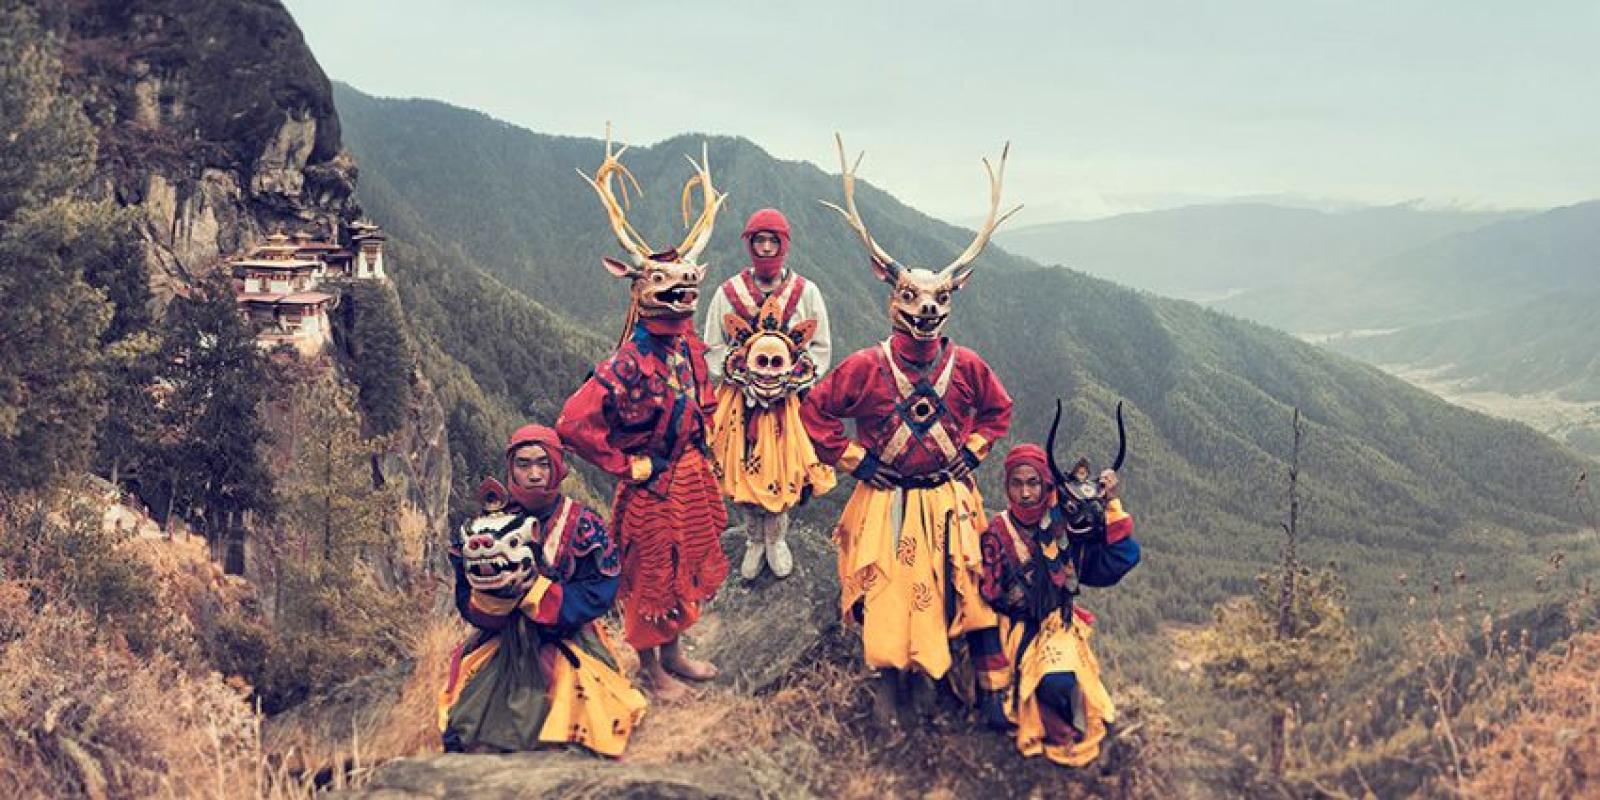 Jimmy Nelson - XXIX 3 // XXIX Bhutan, Photography 2016, Printed After